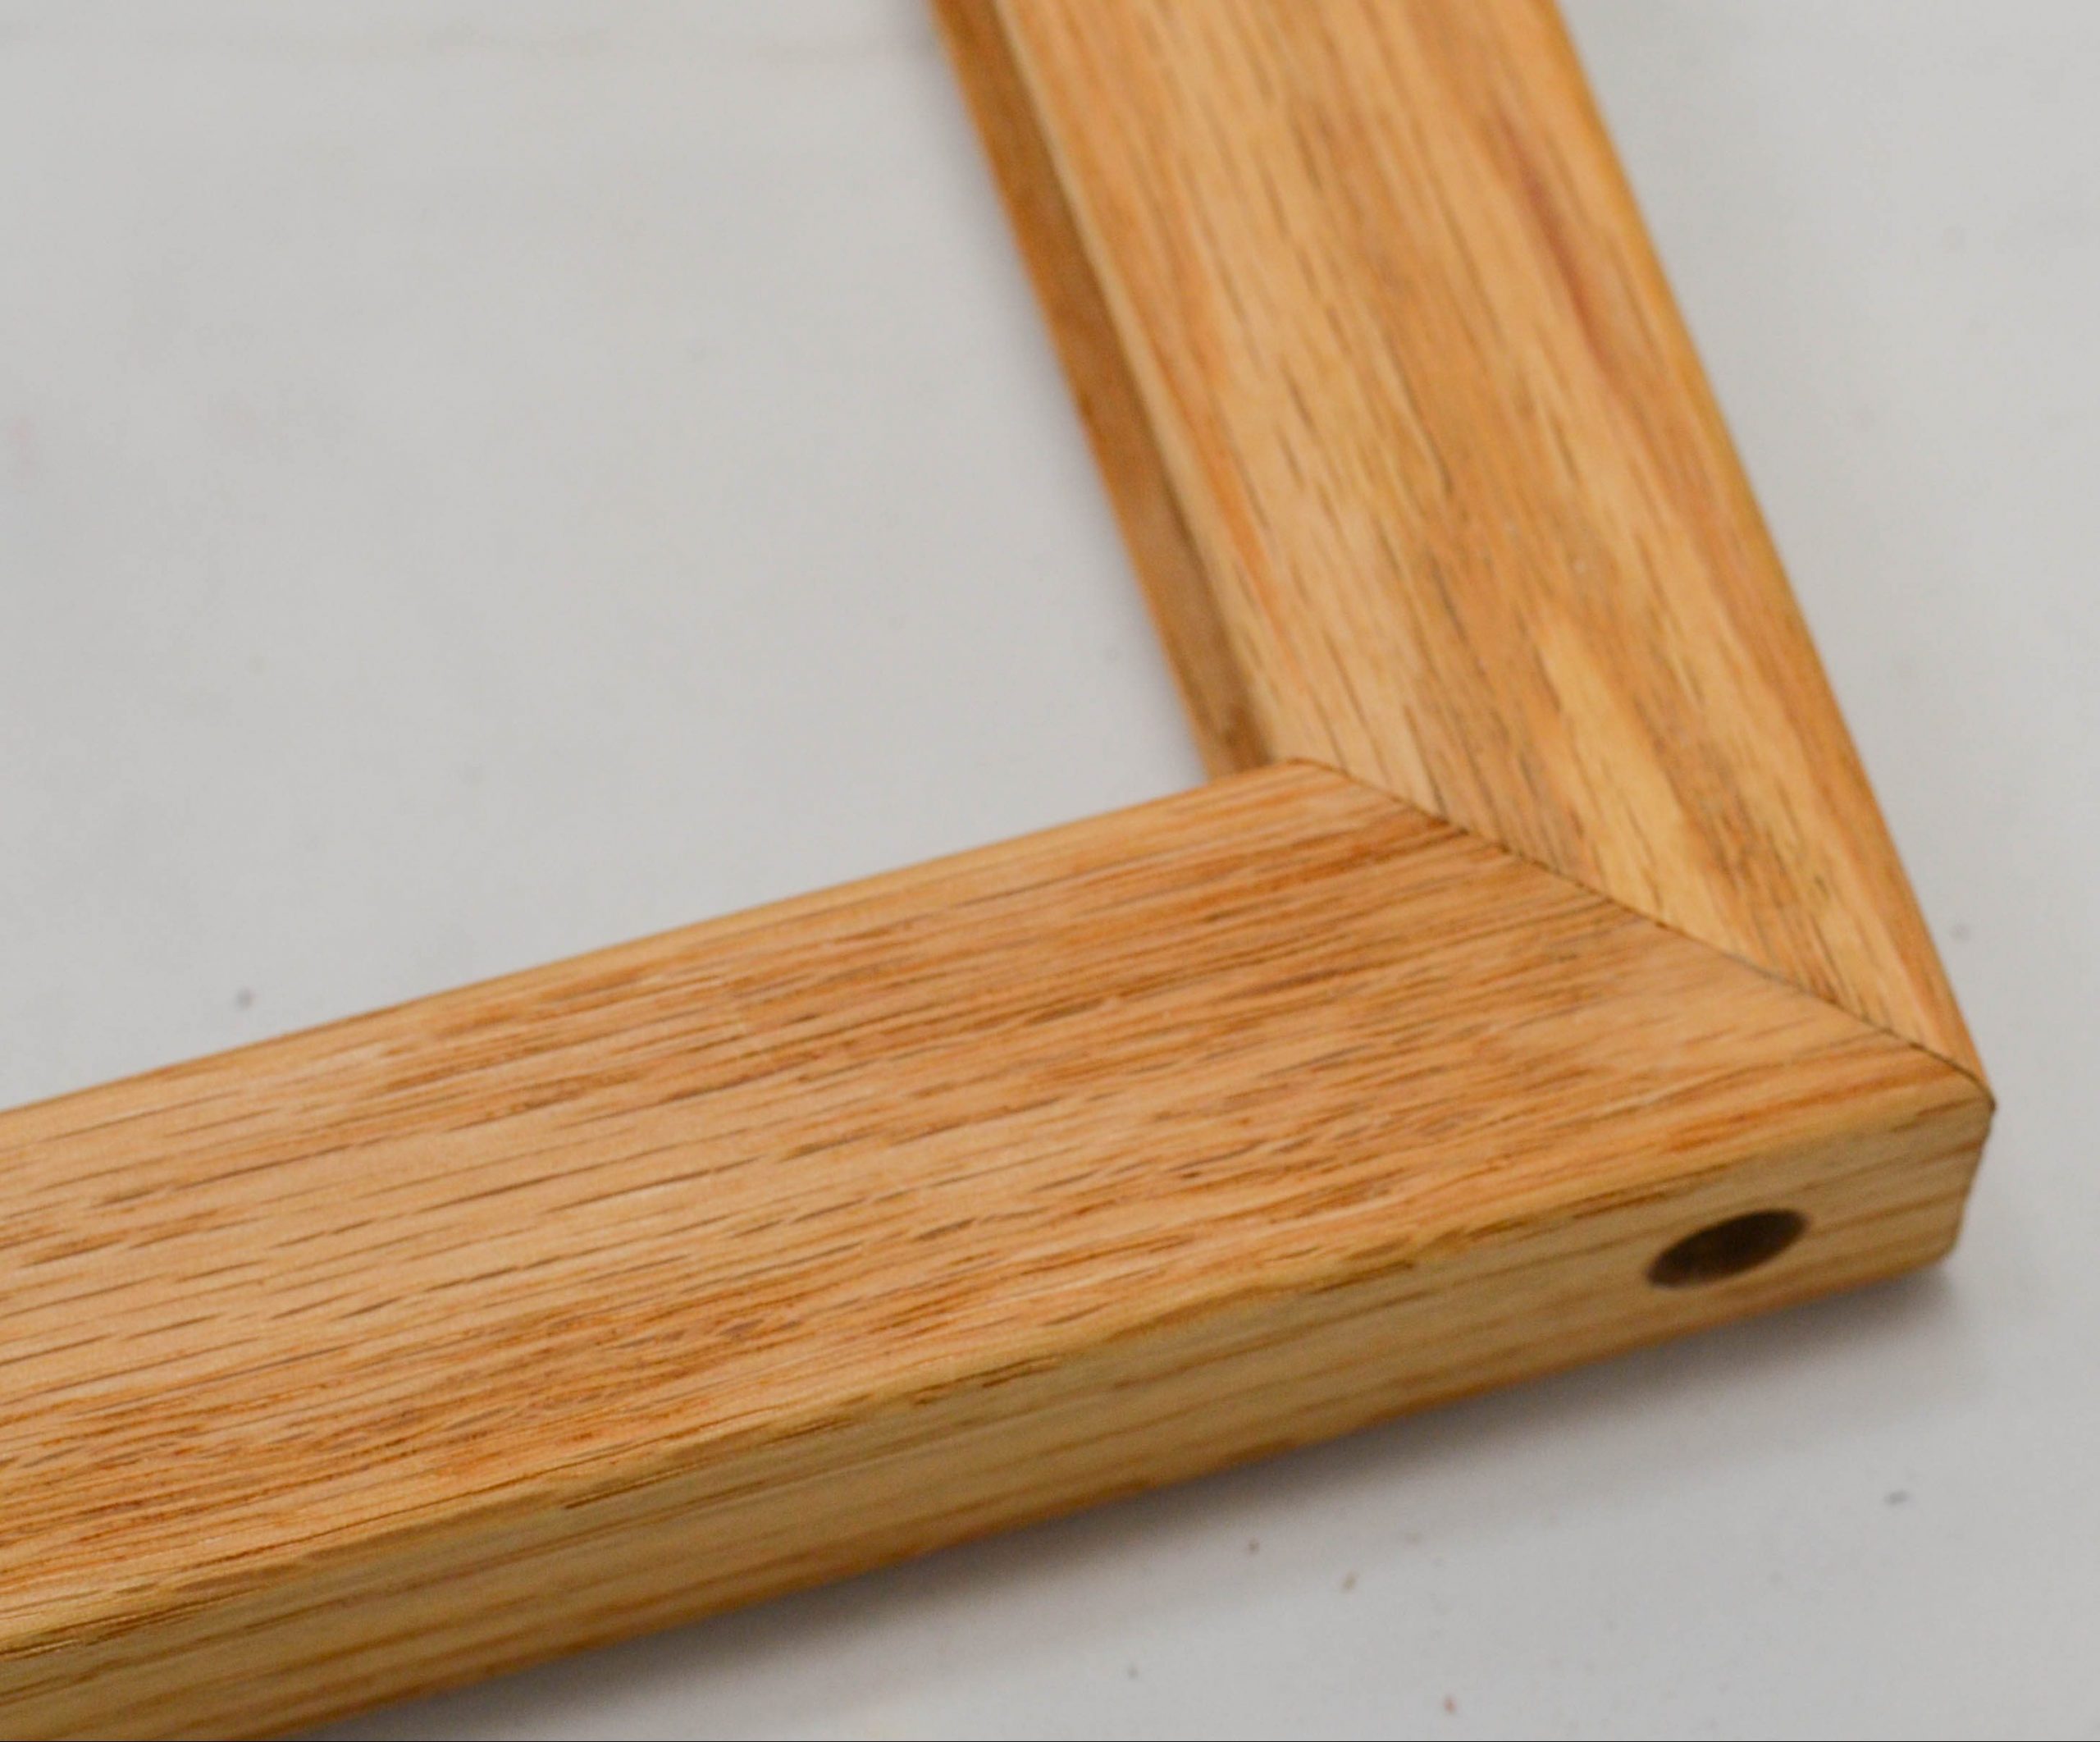 4x6 Oak Wooden Frame - Narrow - CR2305aa